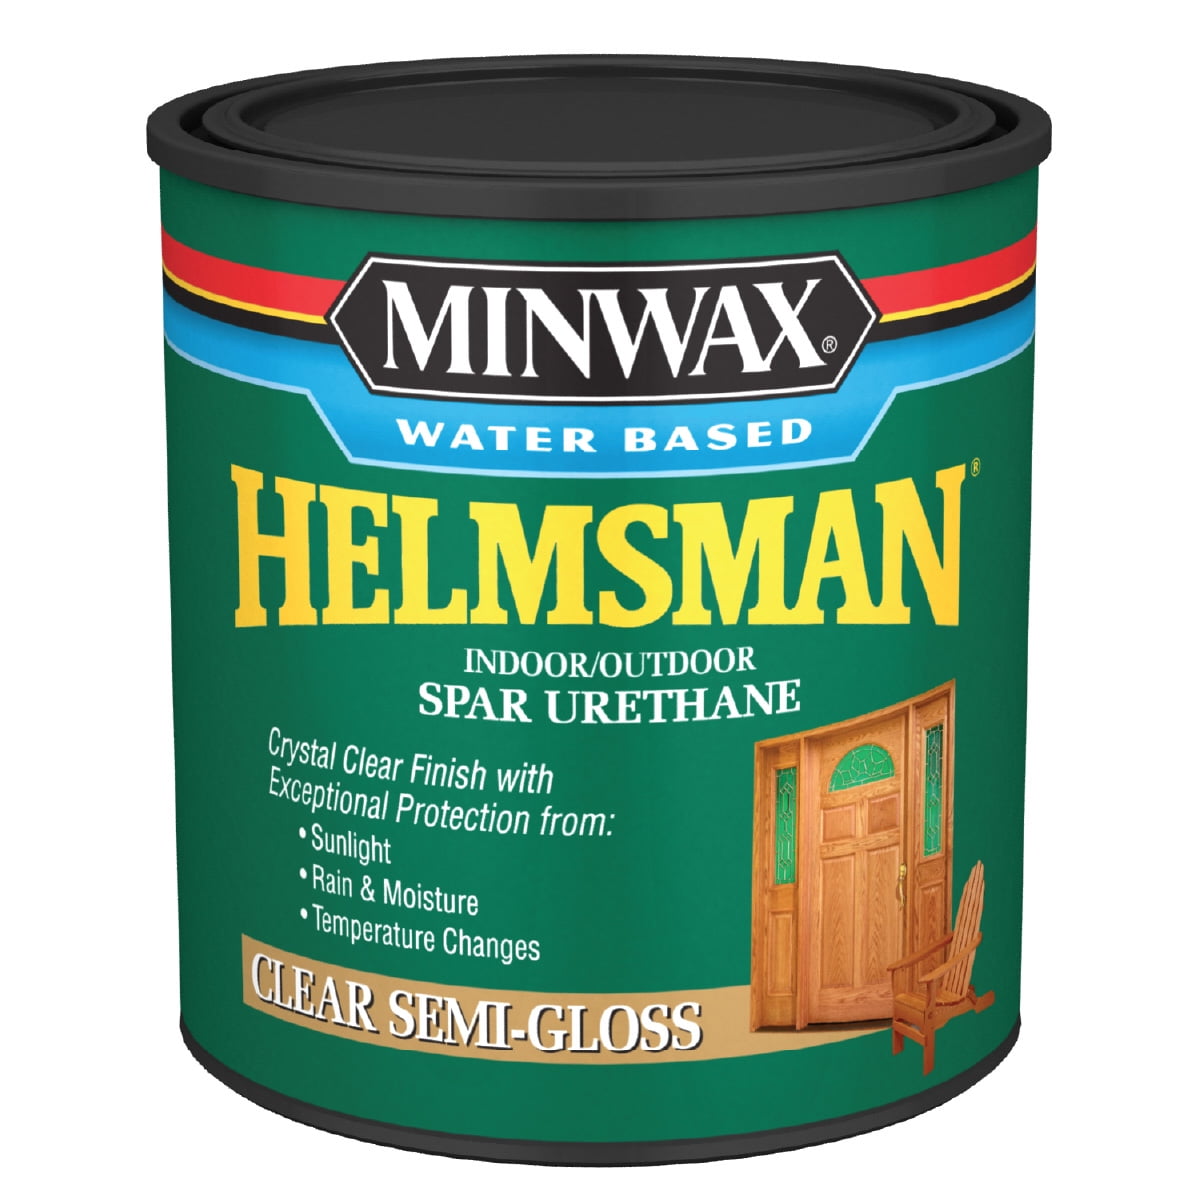 Picture of Minwax 1373026 1 qt. Helmsman Water-based Semi-Gloss Urethane